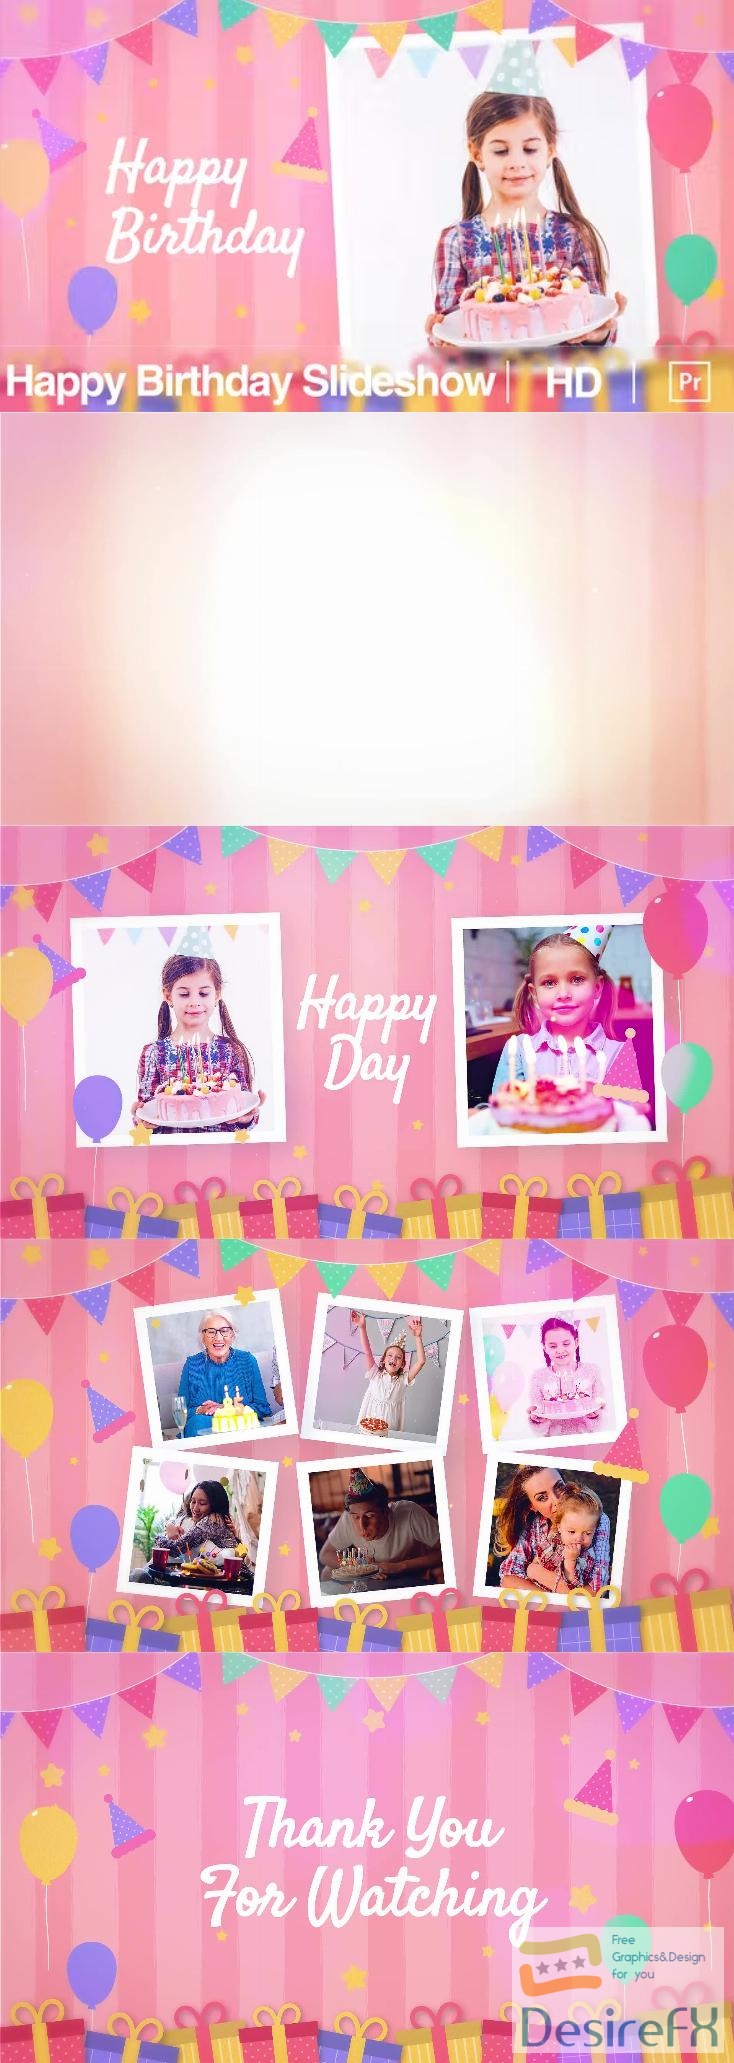 Videohive - Happy Birthday Slideshow - 38277554